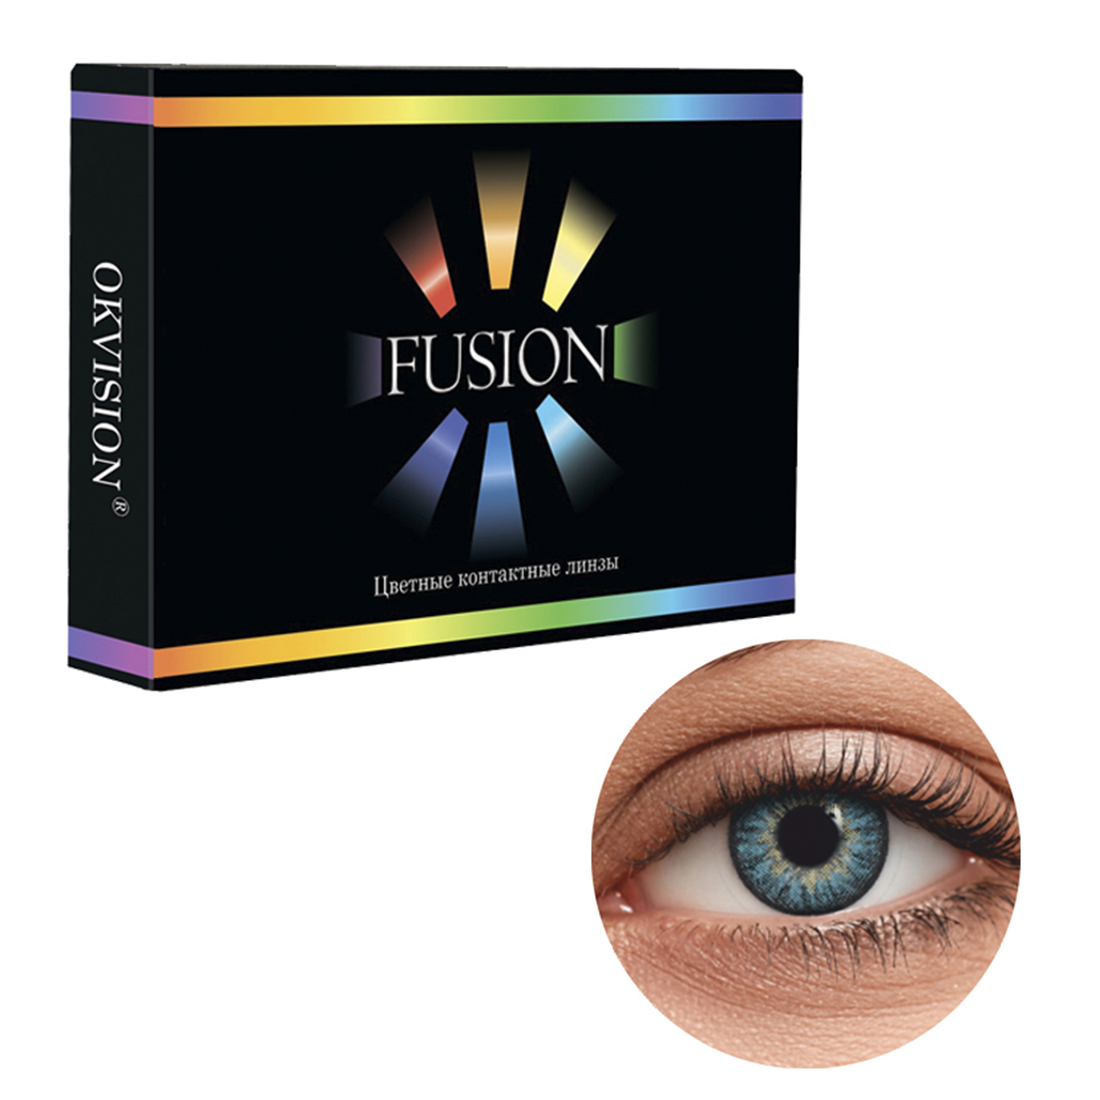 Цветные контактные линзы OKVision Fusion monthly R 8.6 -6.00 цвет Sky Blue 2 шт 1 месяц - фото 1